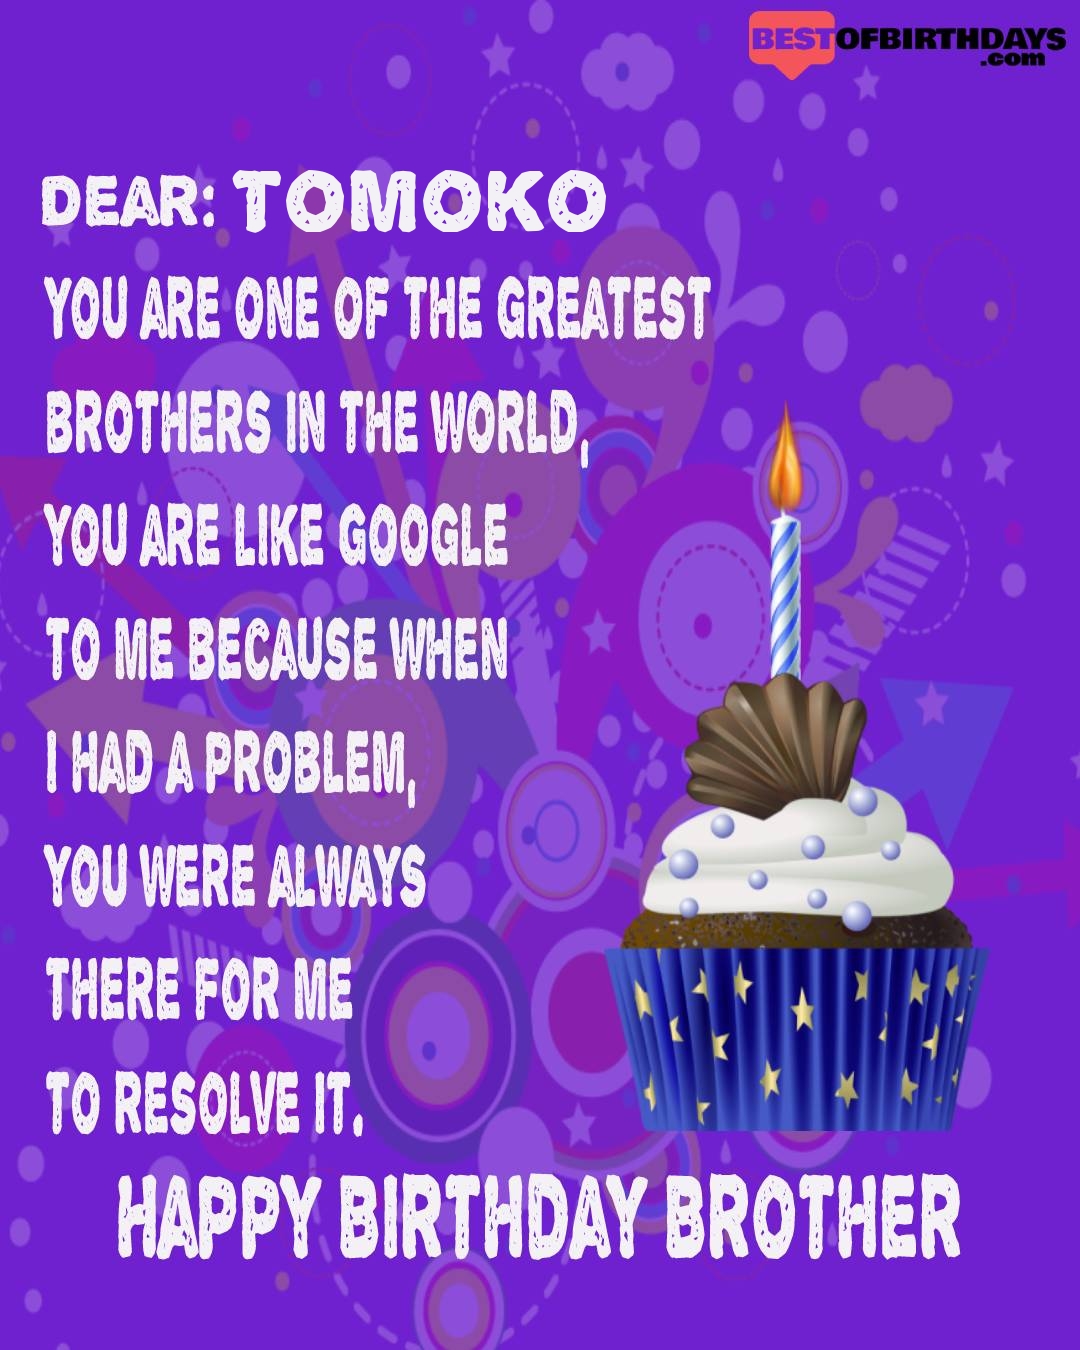 Happy birthday tomoko bhai brother bro